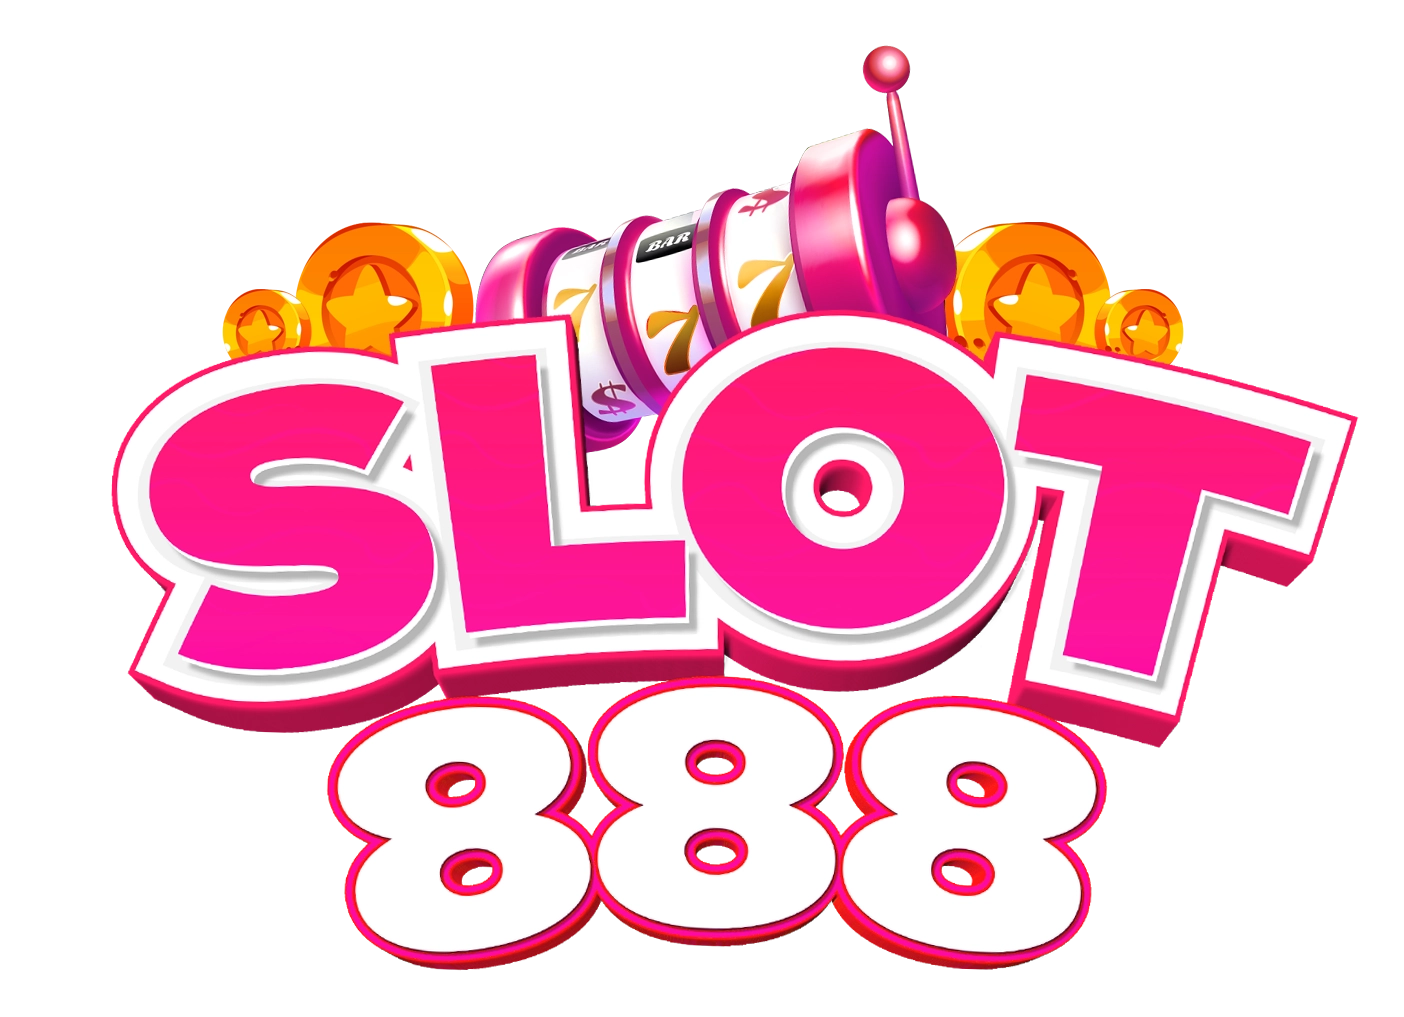 slot888